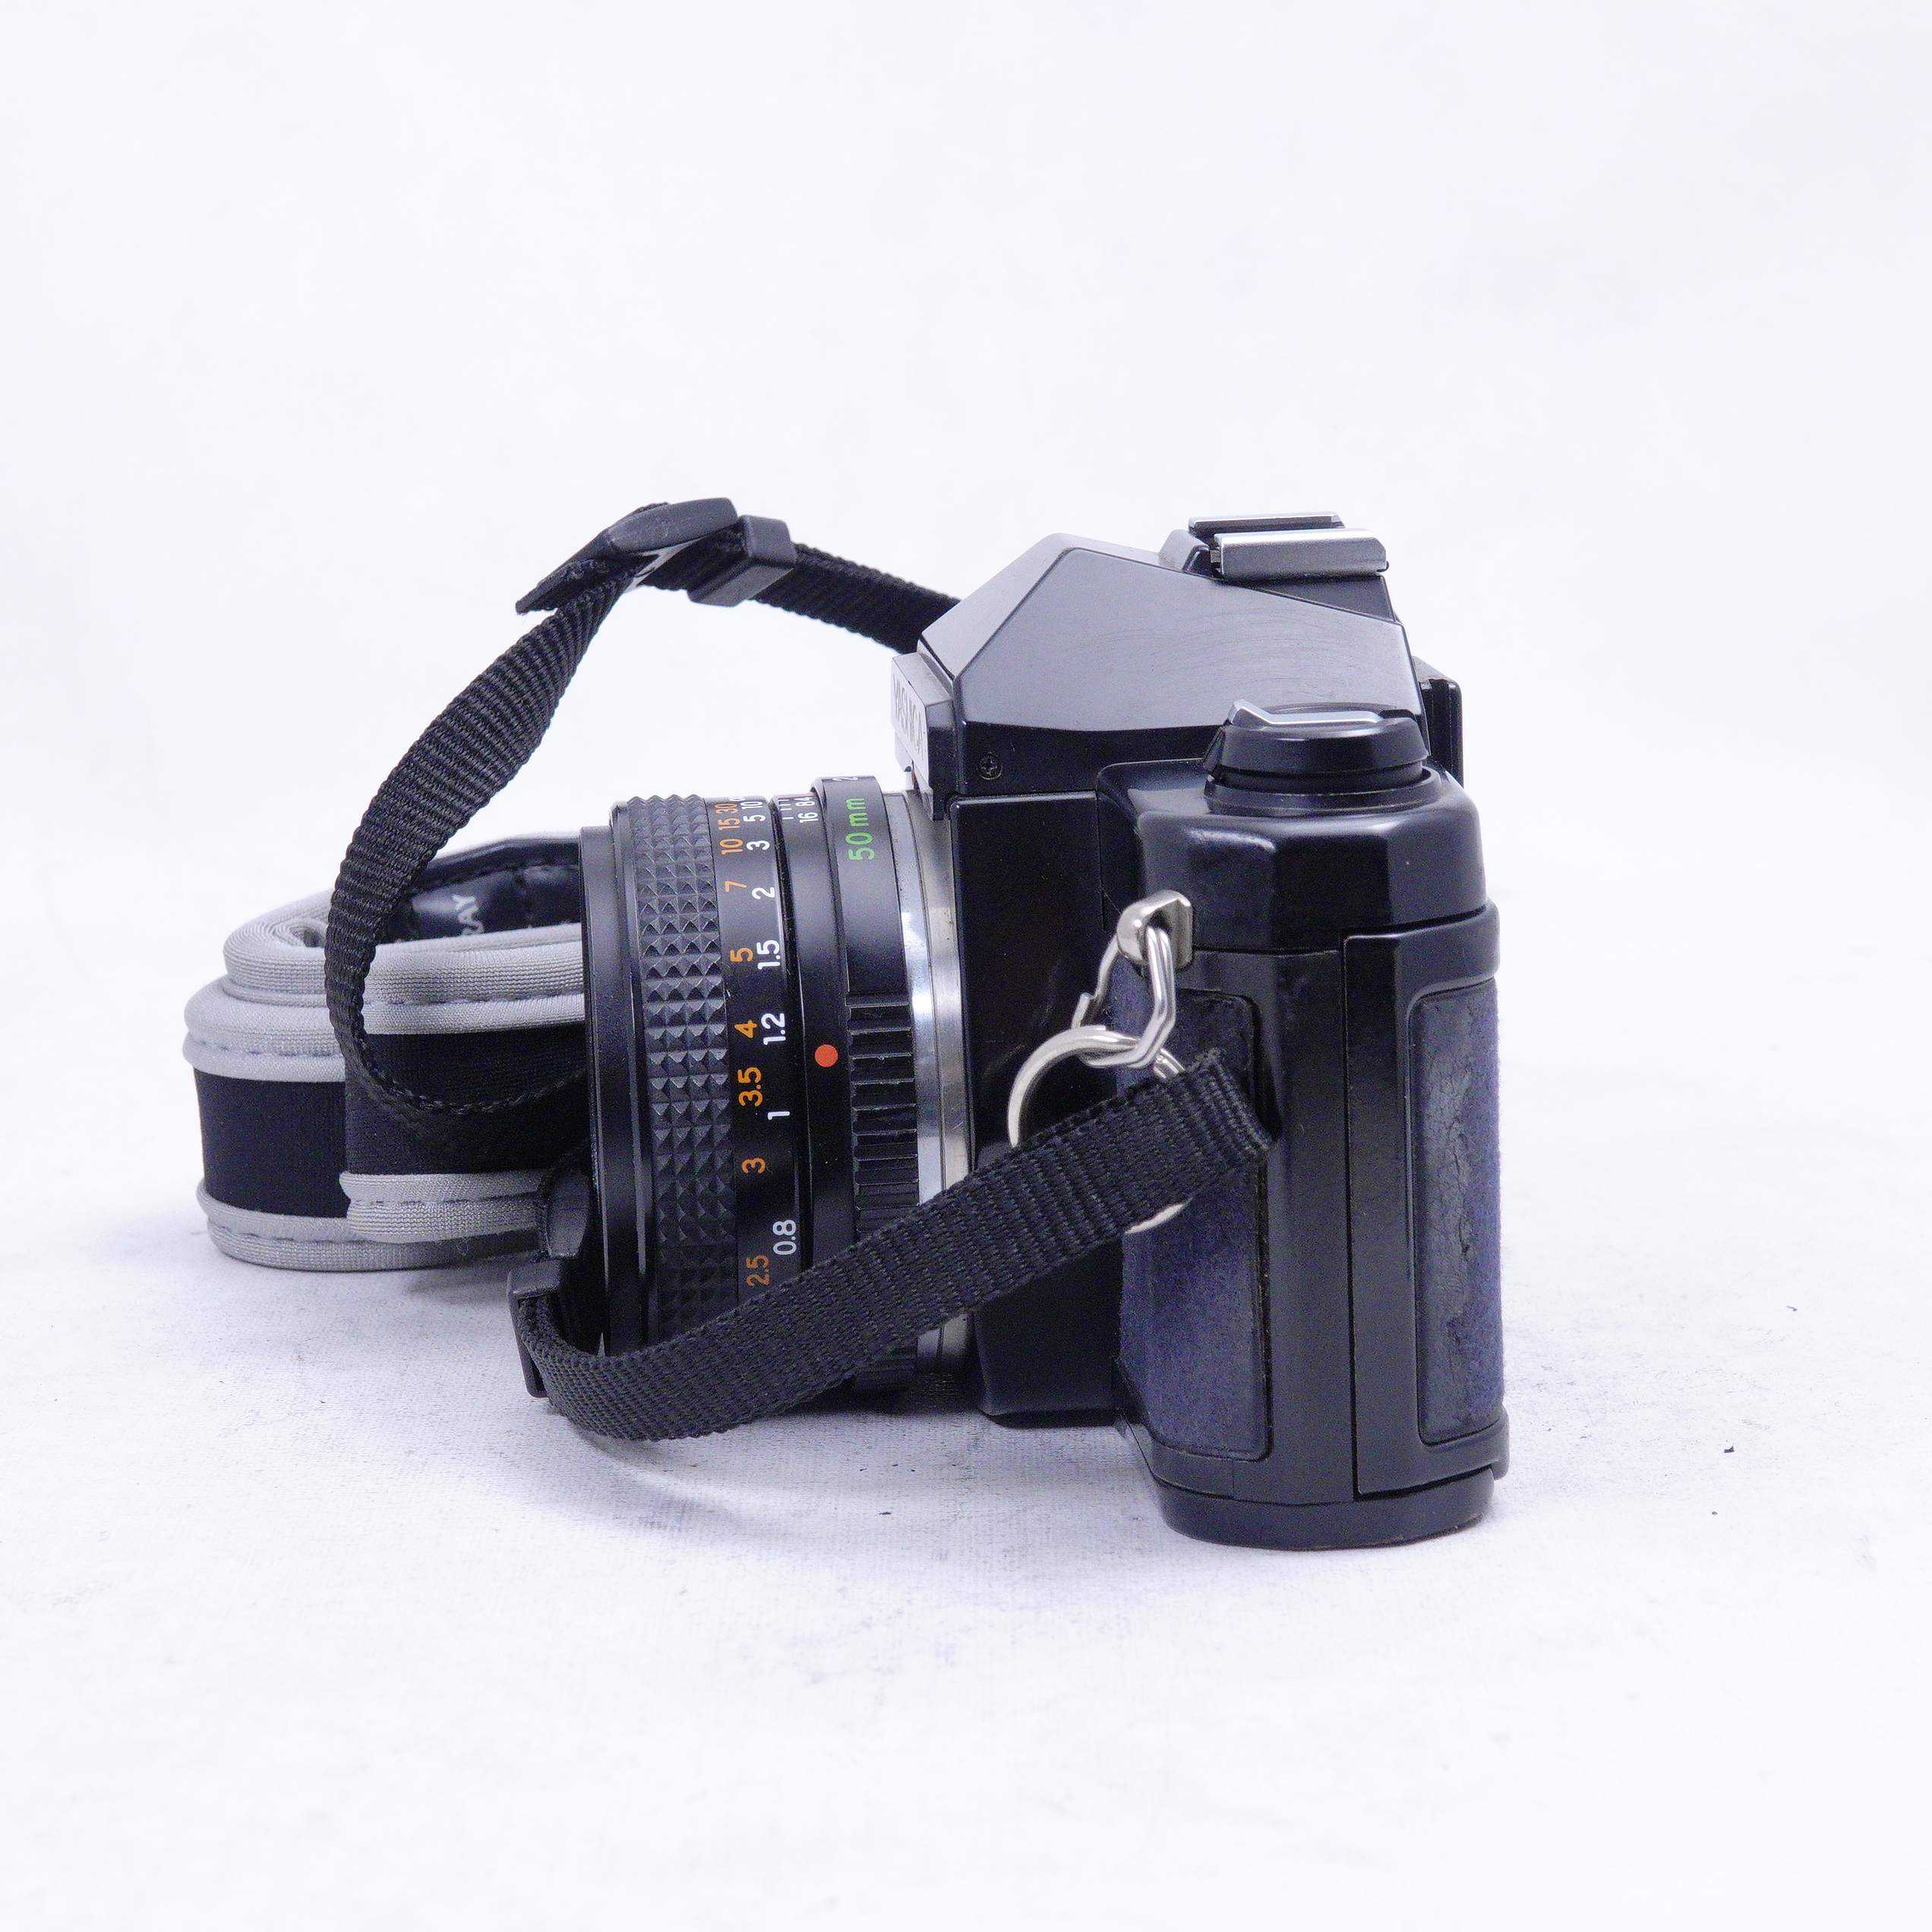 Yashica FX-3 con lente Yashica 50mm F2 - Usado